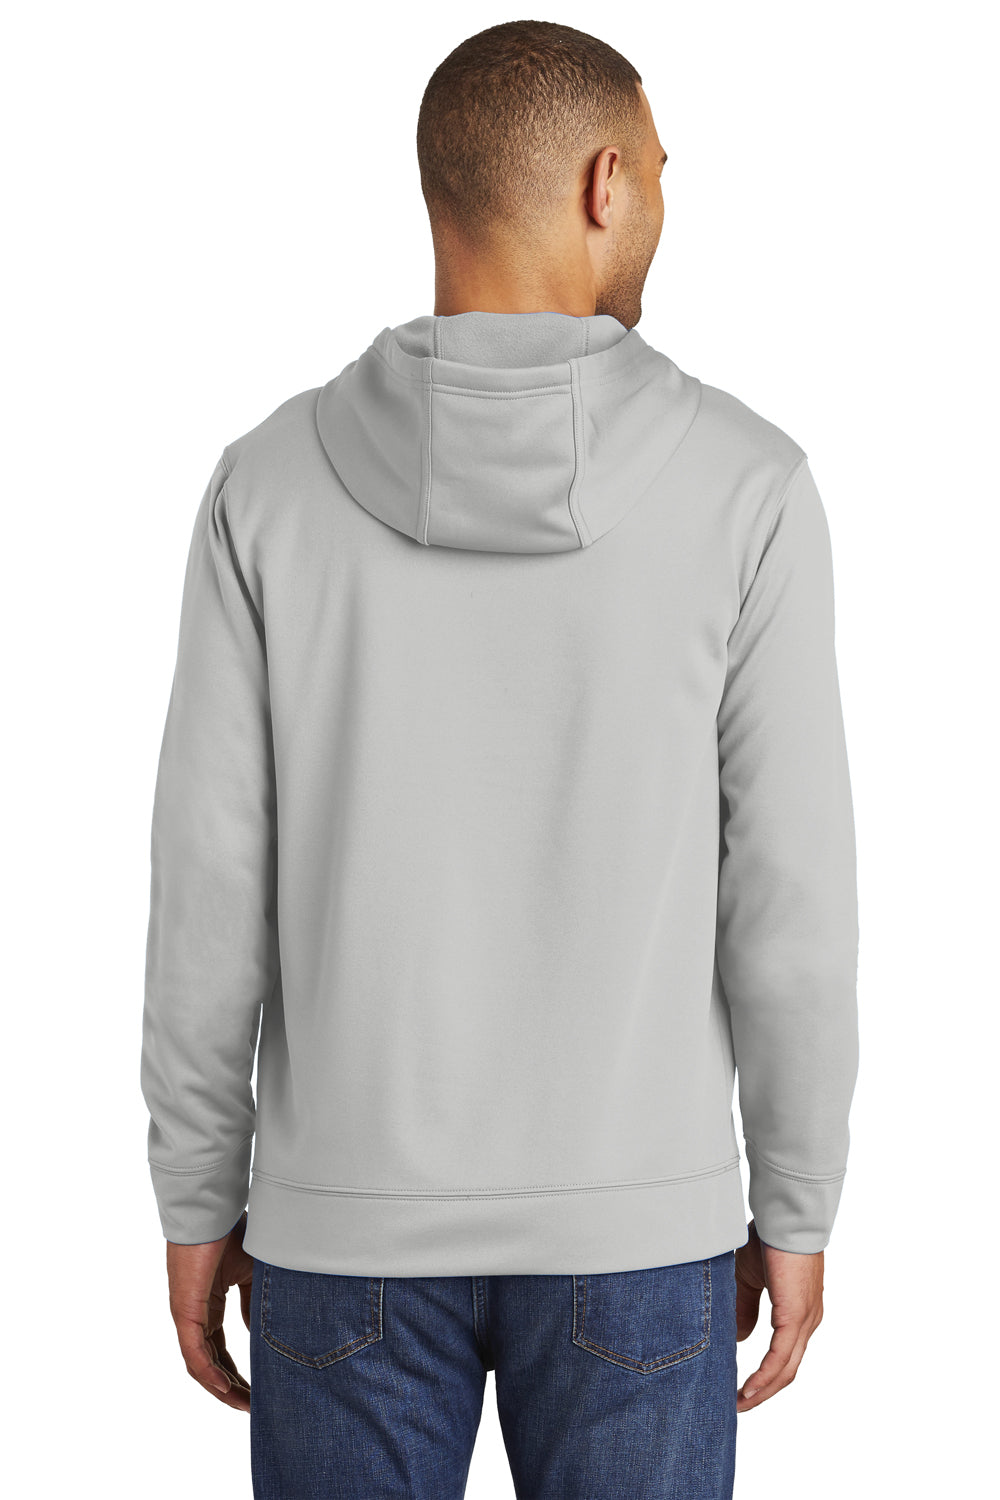 Port & Company PC590H Mens Dry Zone Performance Moisture Wicking Fleece Hooded Sweatshirt Hoodie Silver Grey Back